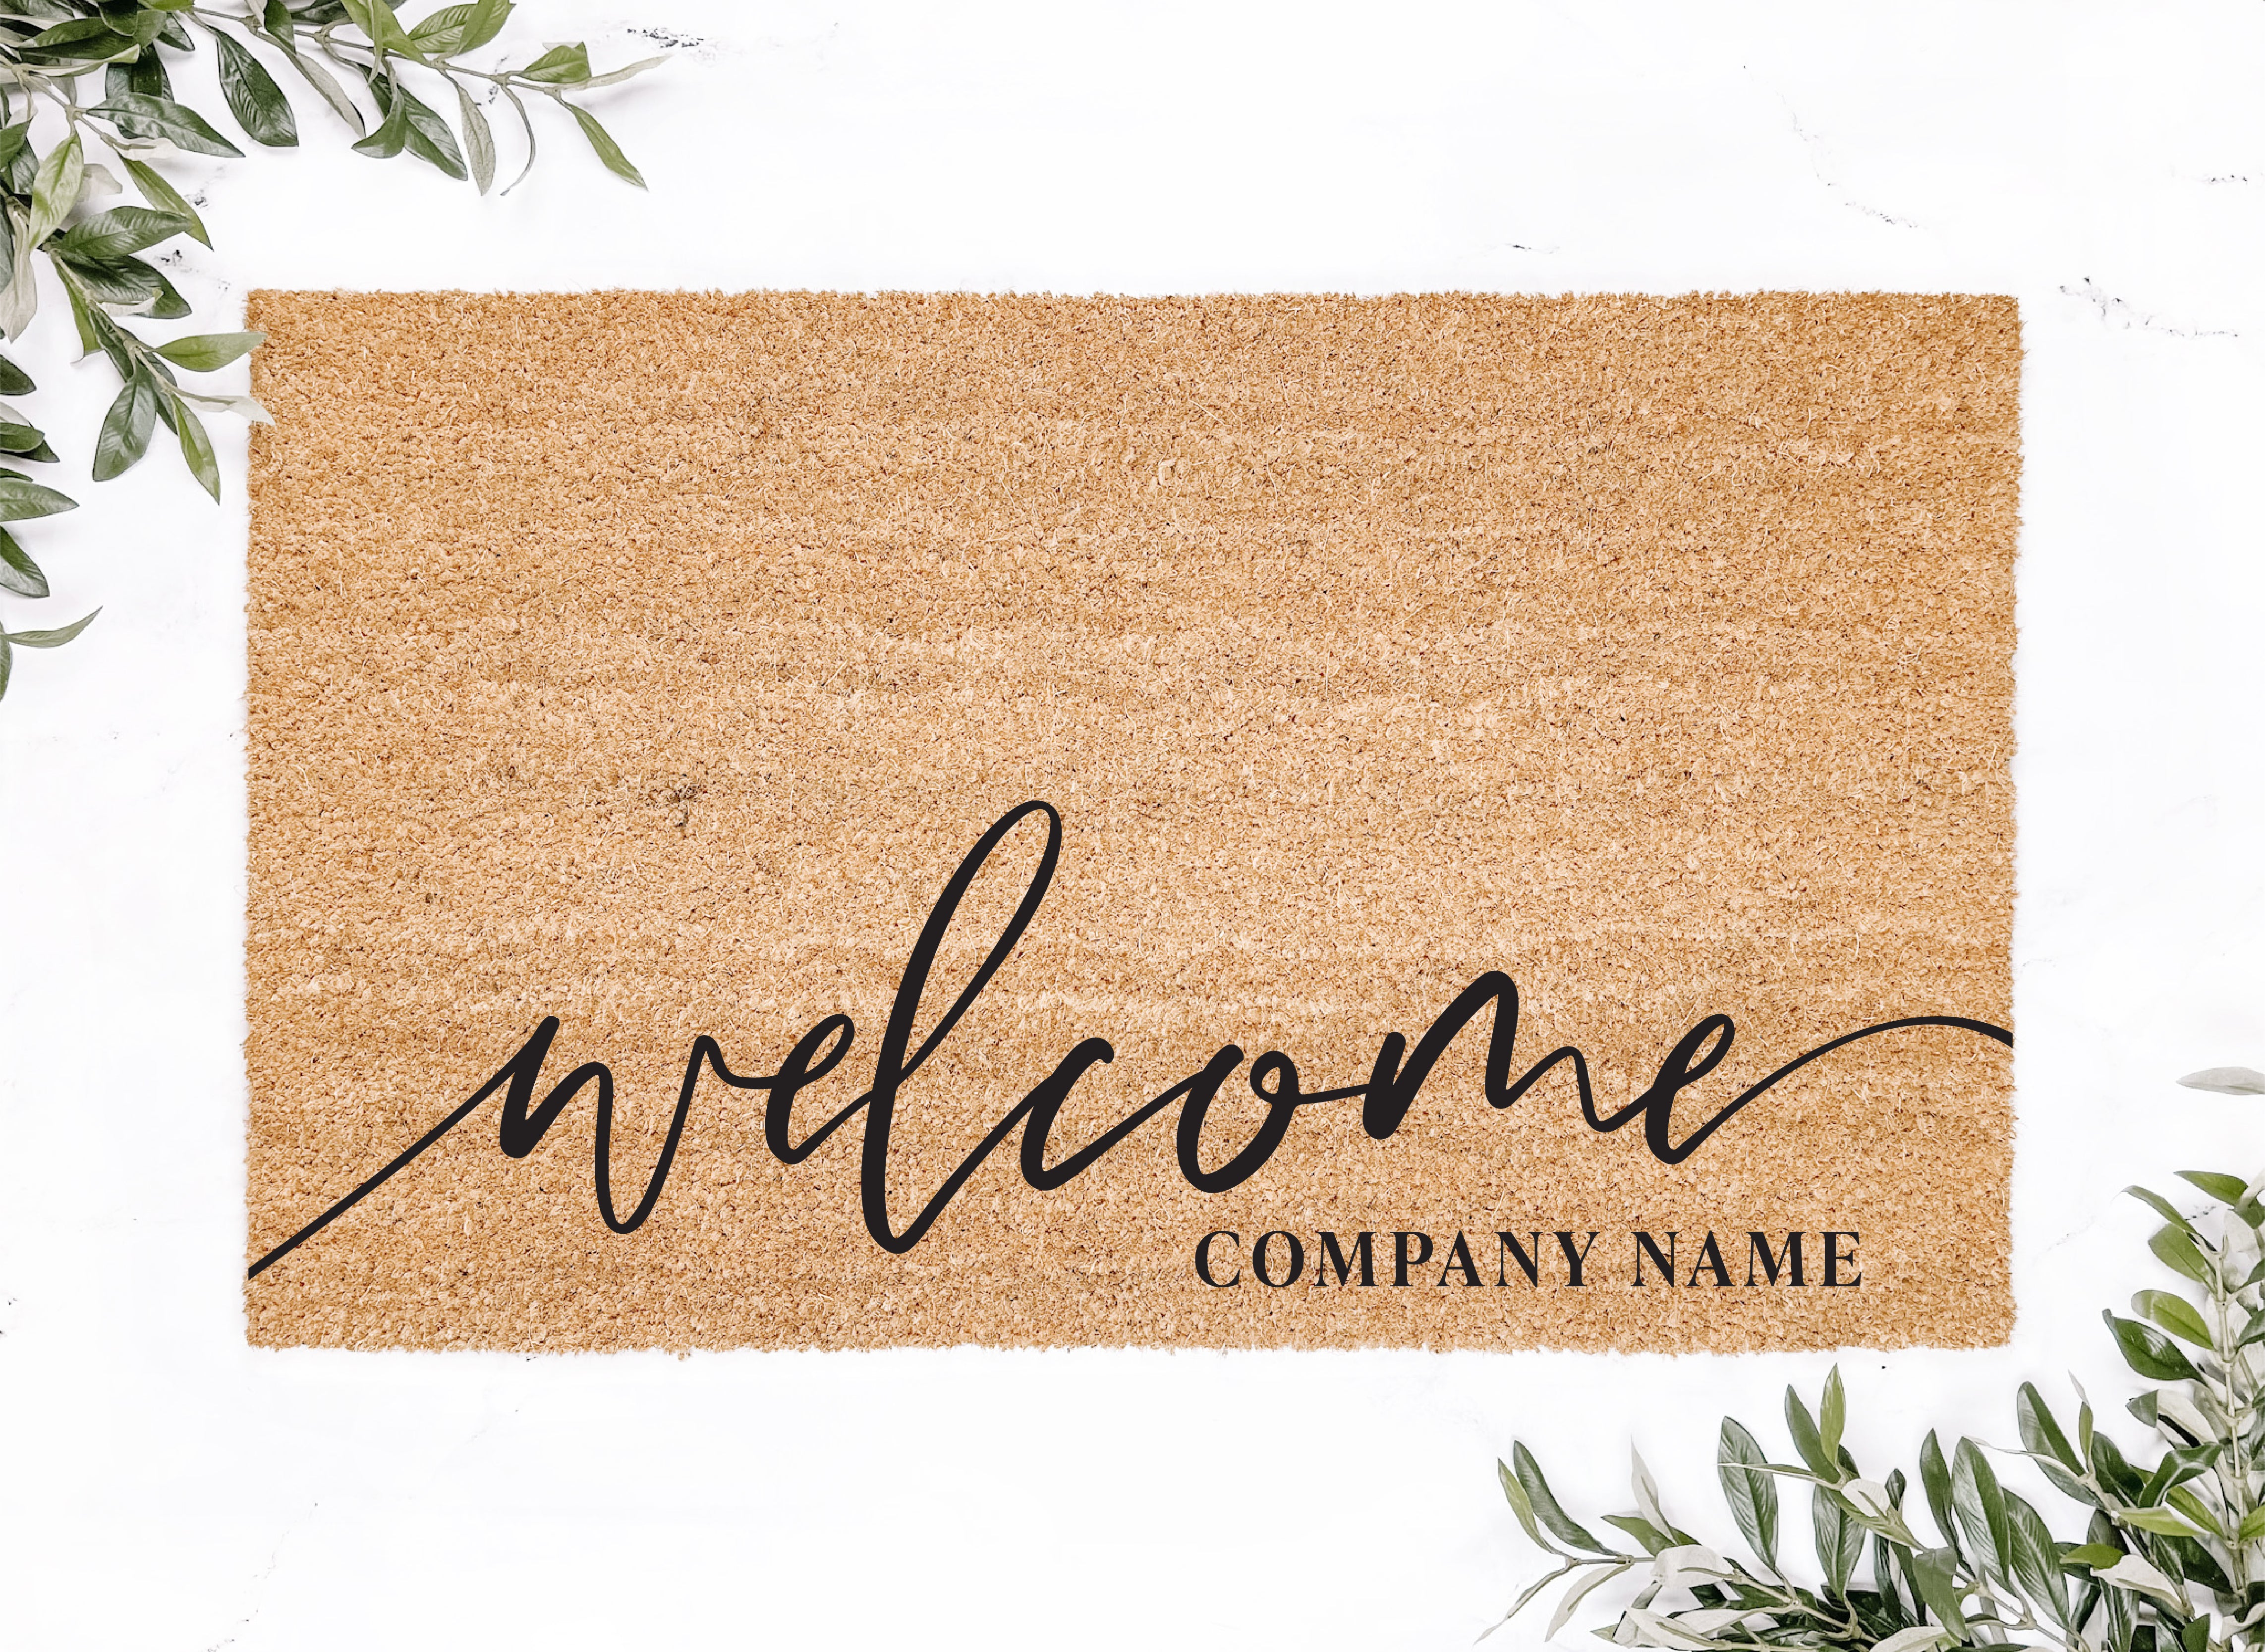 Custom Welcome Company Name or Last Name Doormat